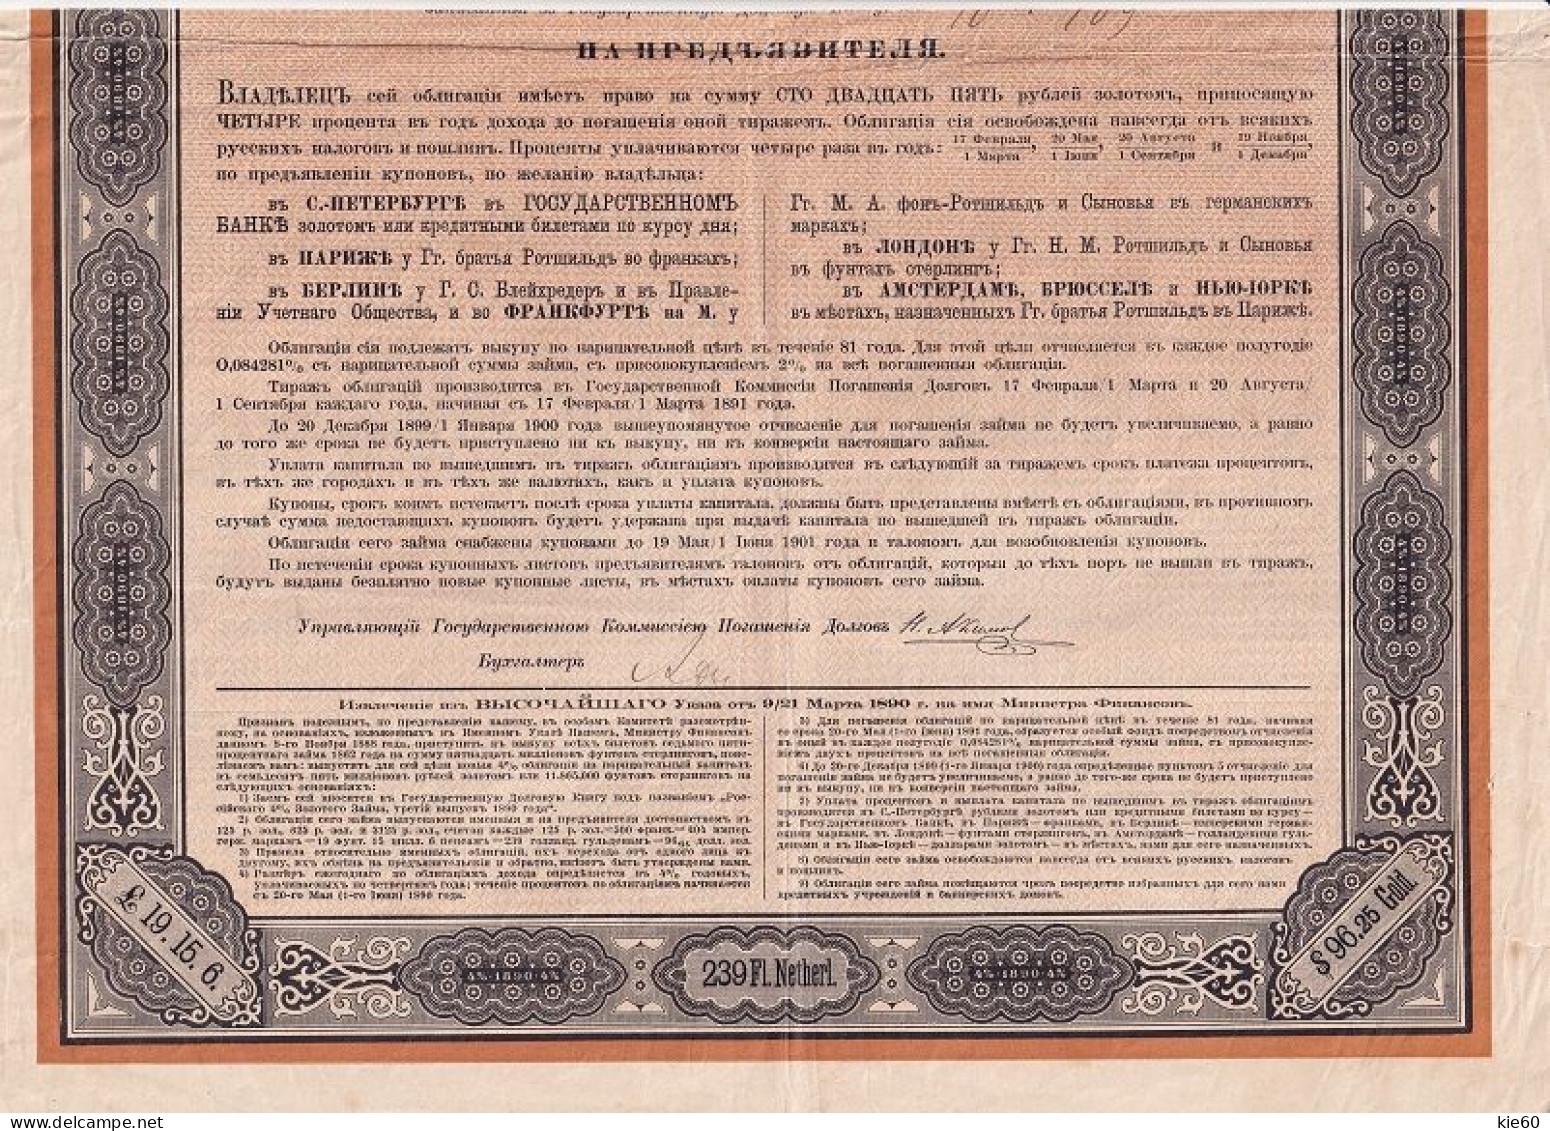 Russia  - 1890 -  125 Rubles  - 4%  Gold Bond - Russland